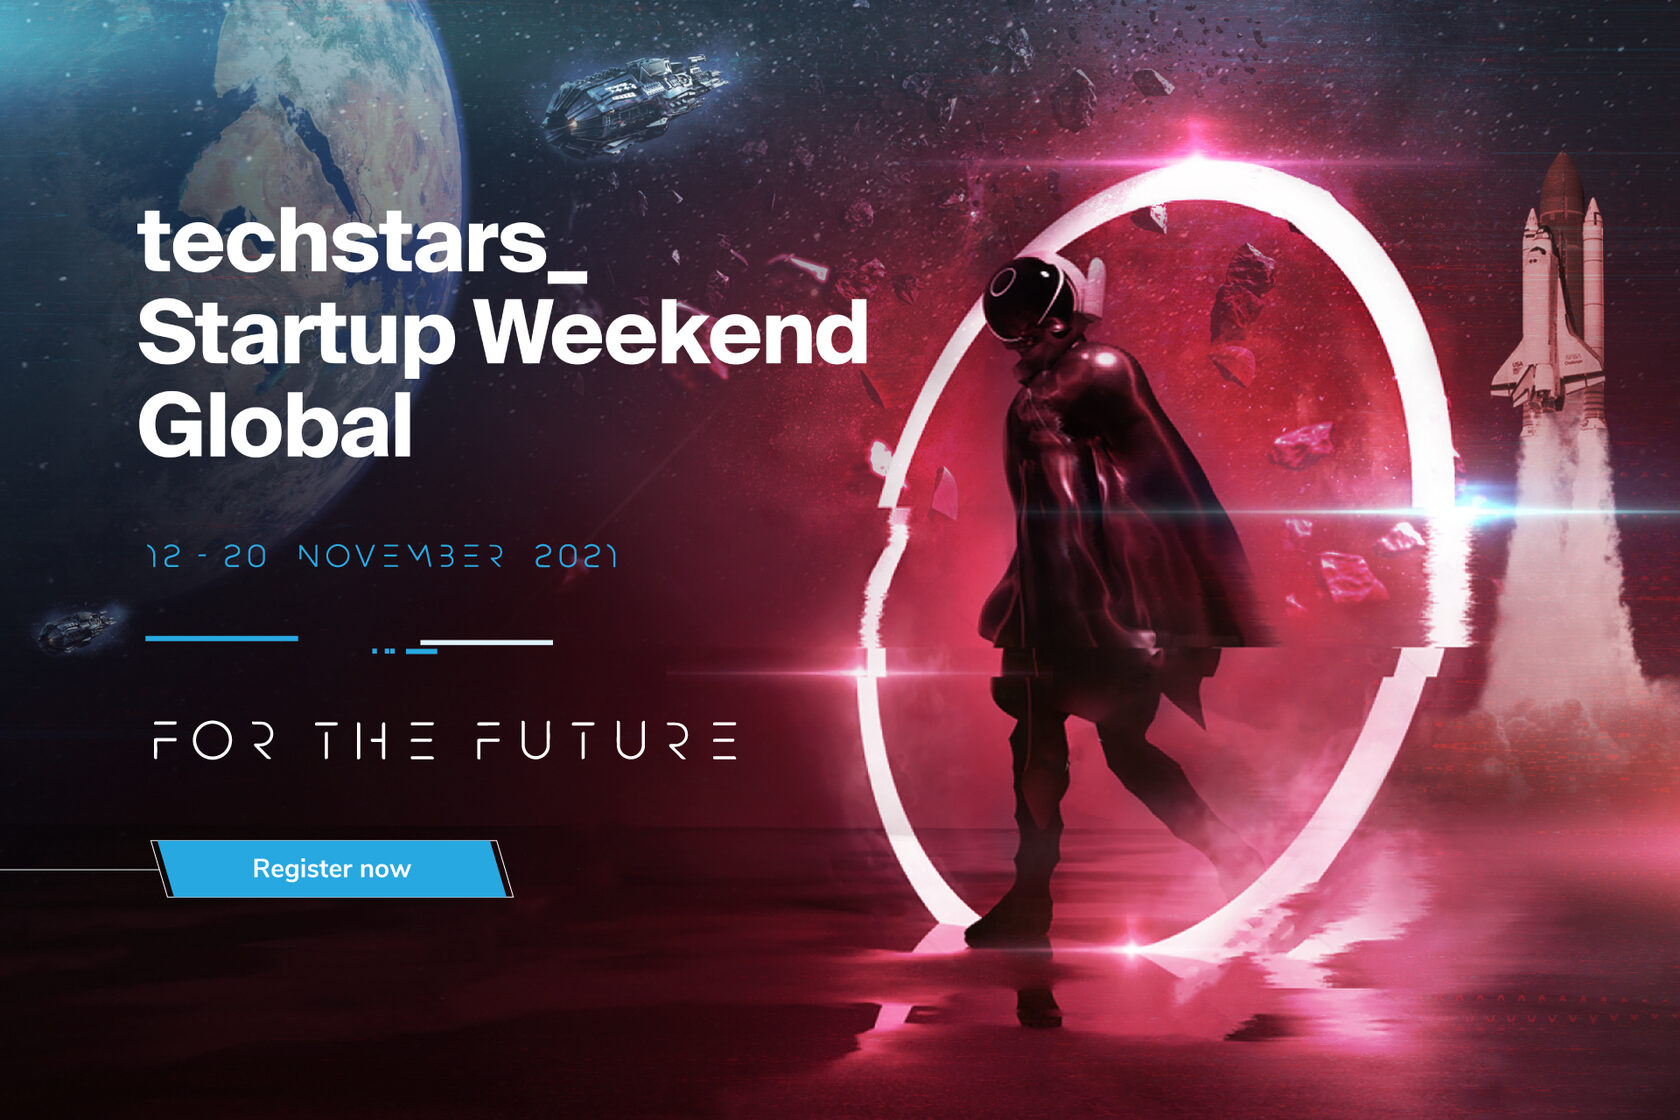 techstars_ Startup Weekend Global from November 12-20, 2021